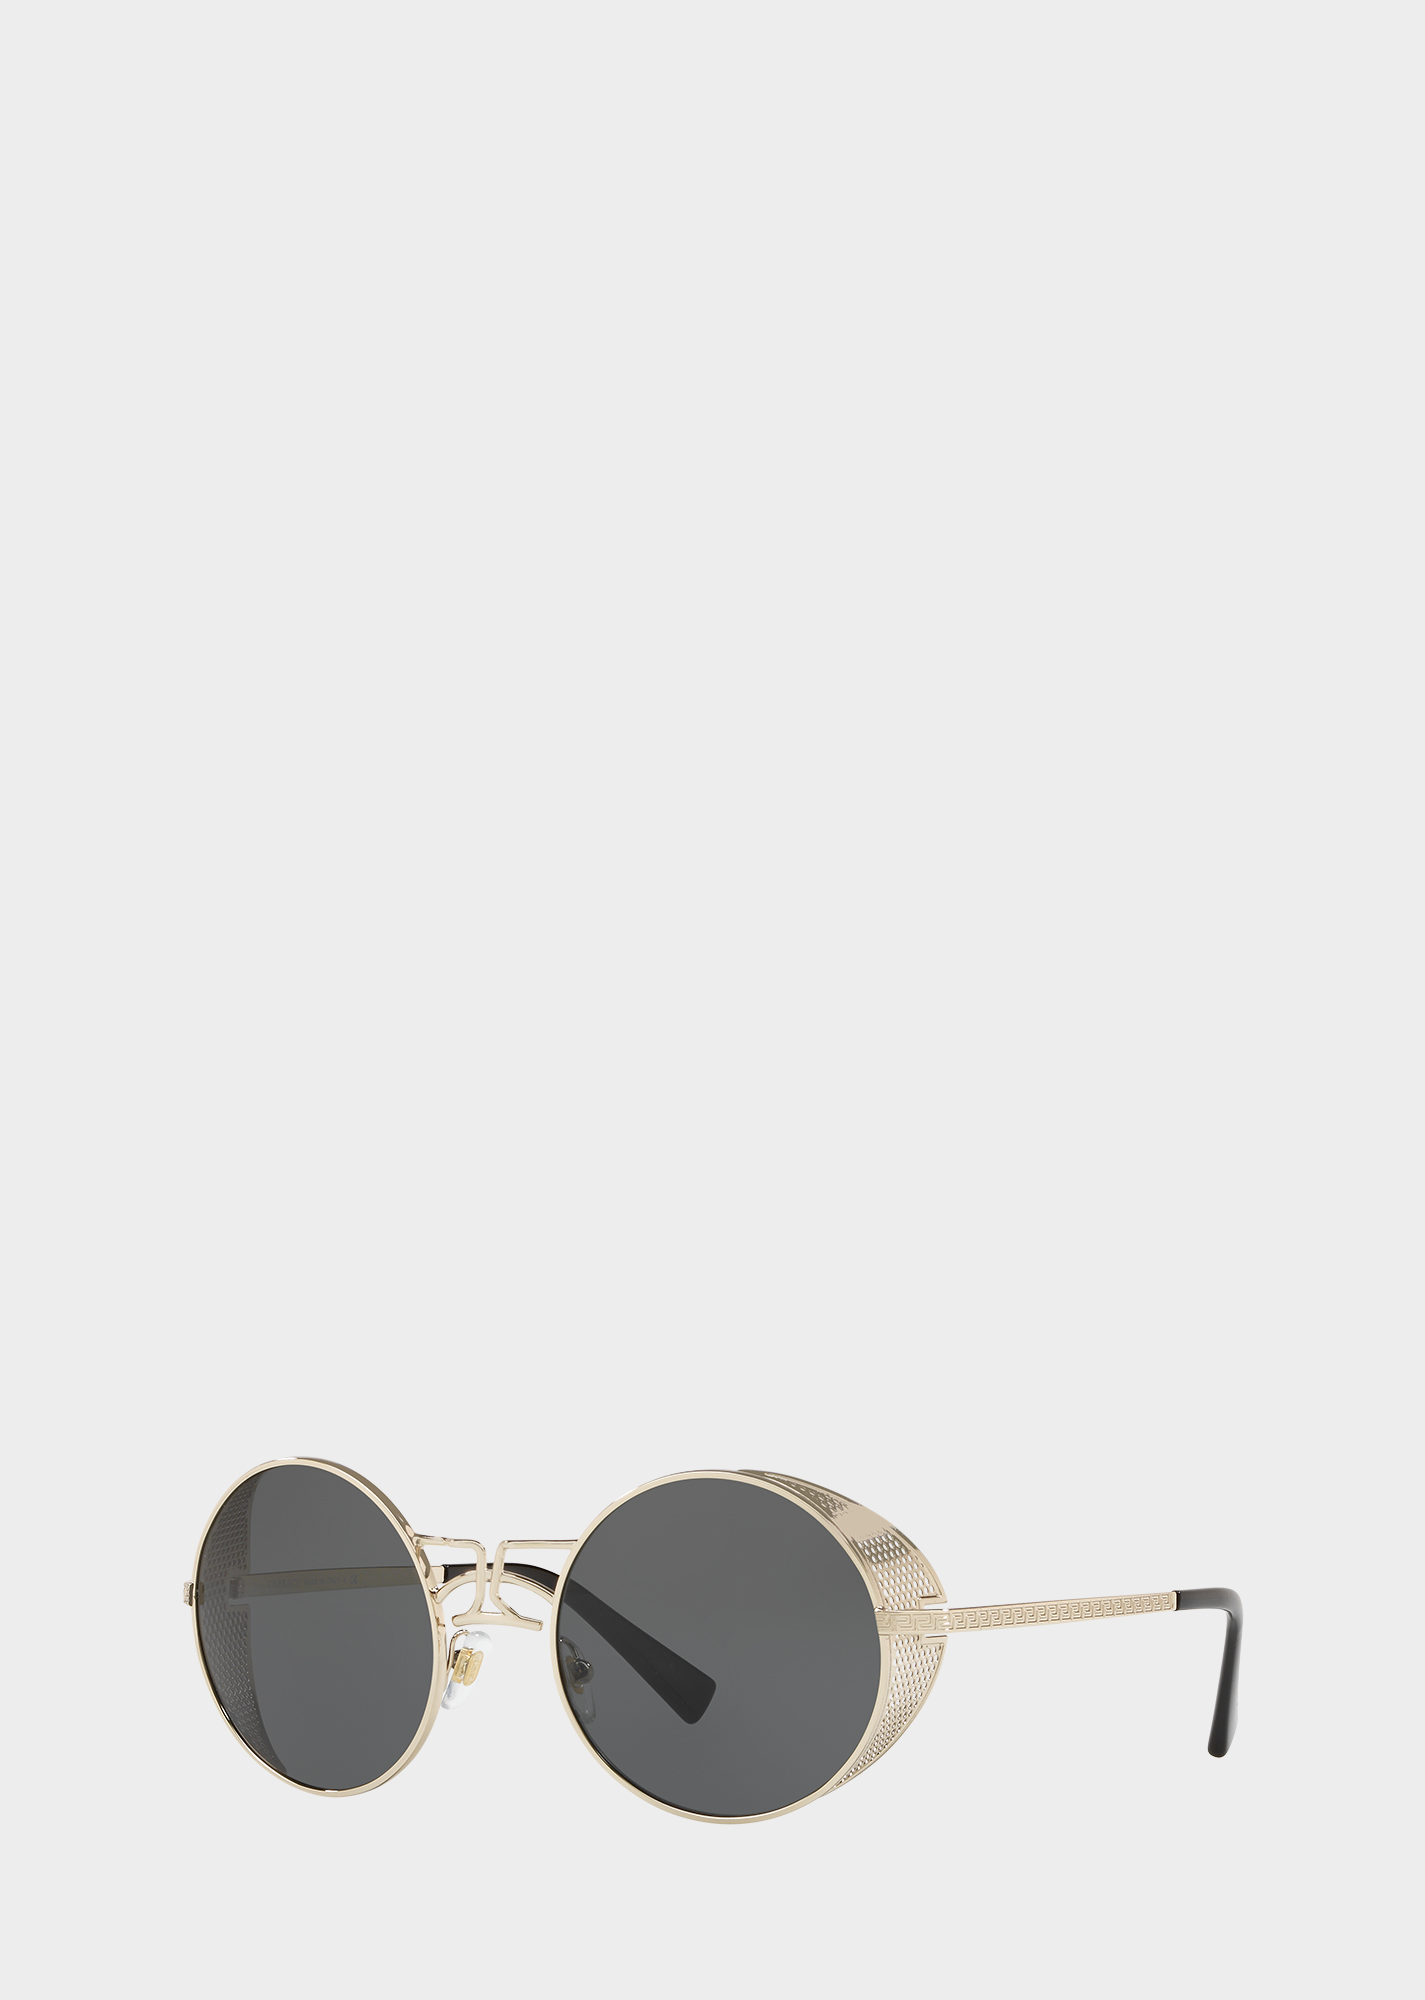 Versace Sunglasses for Men | Official Website